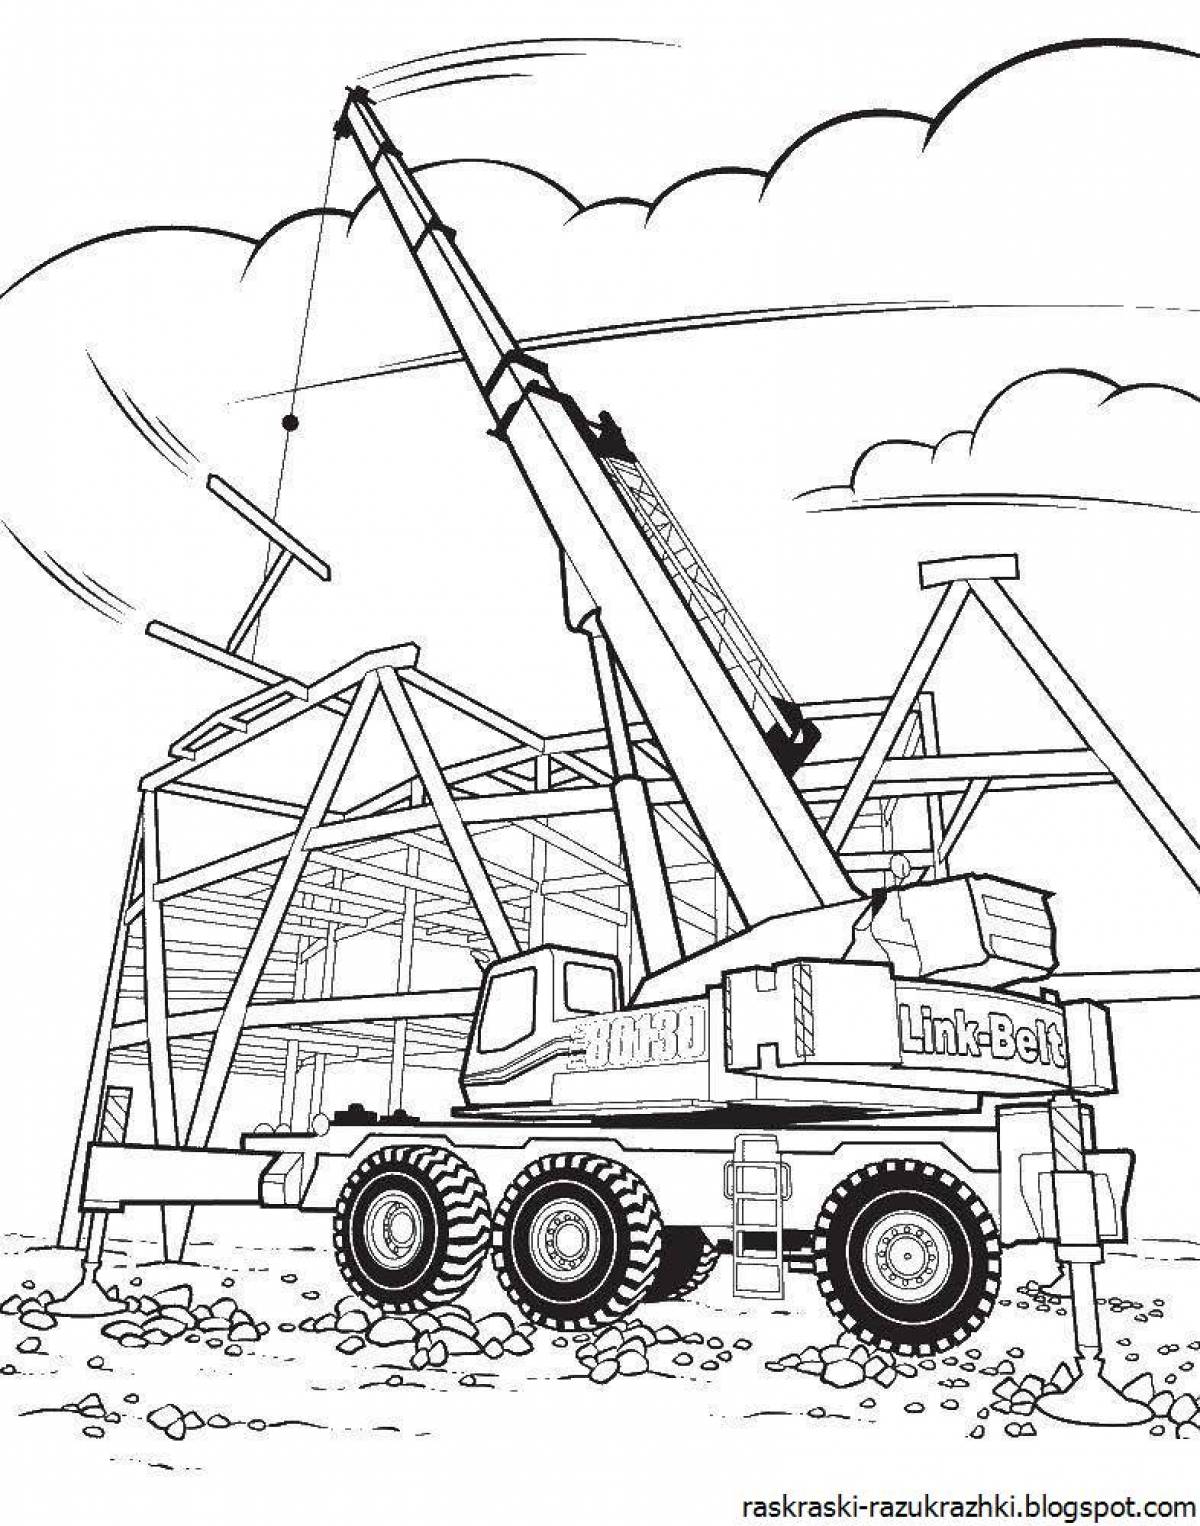 Hoisting crane #6